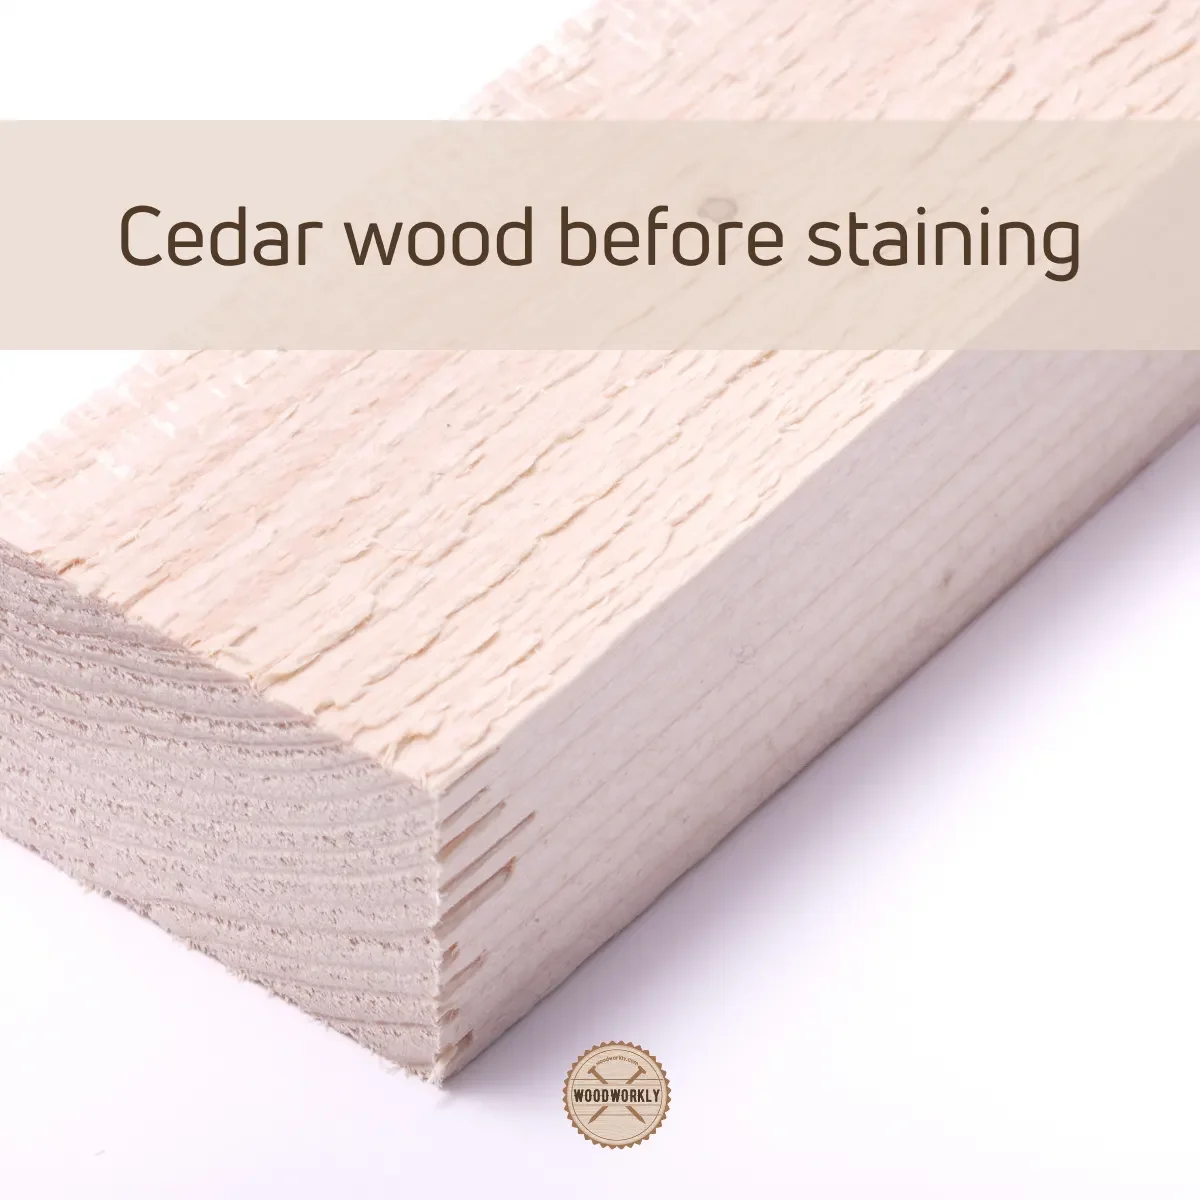 Cedar wood before staining